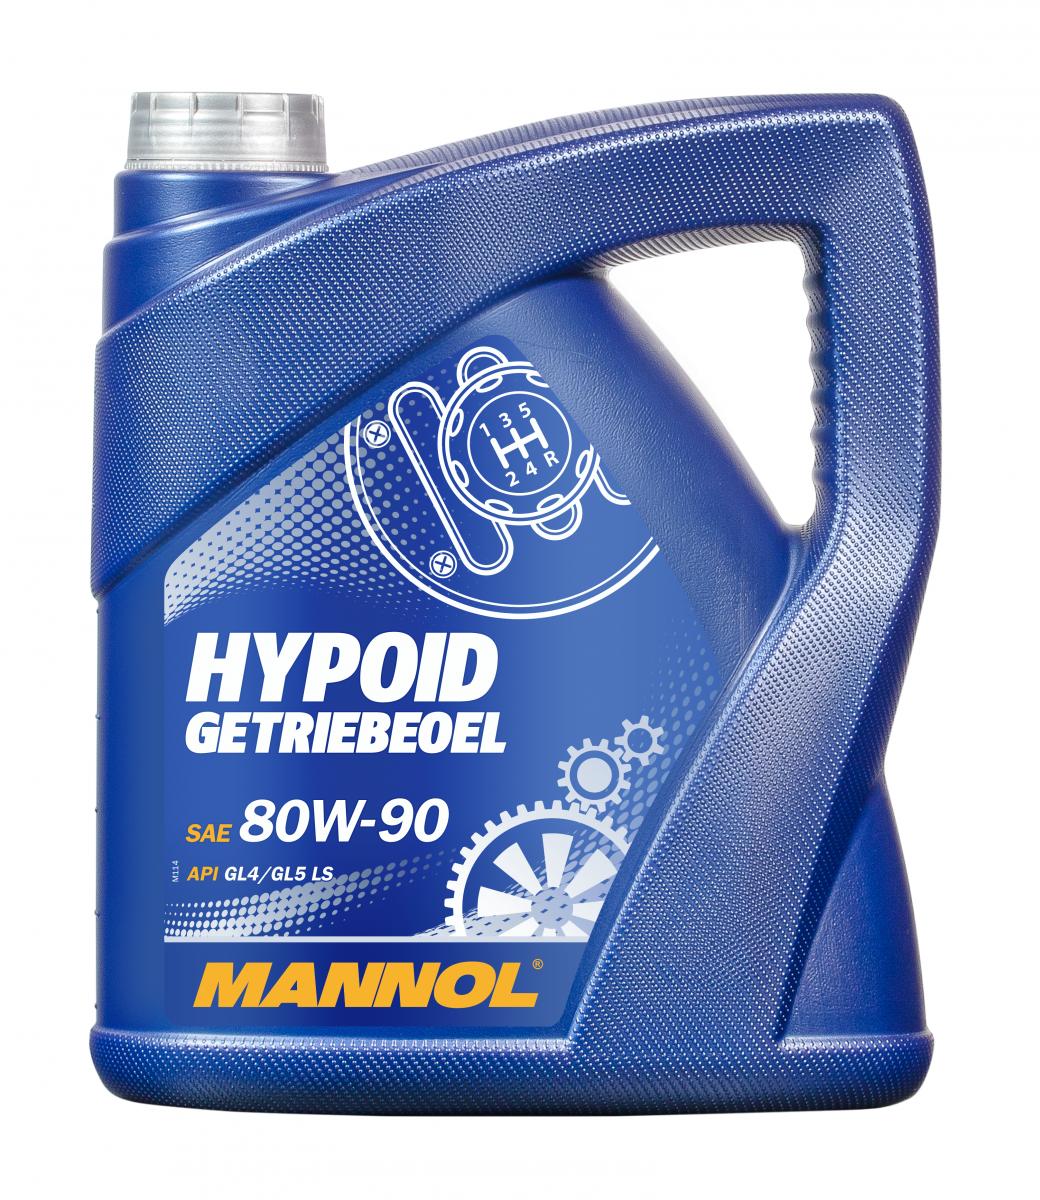 MANNOL Hypoid Getriebeoel